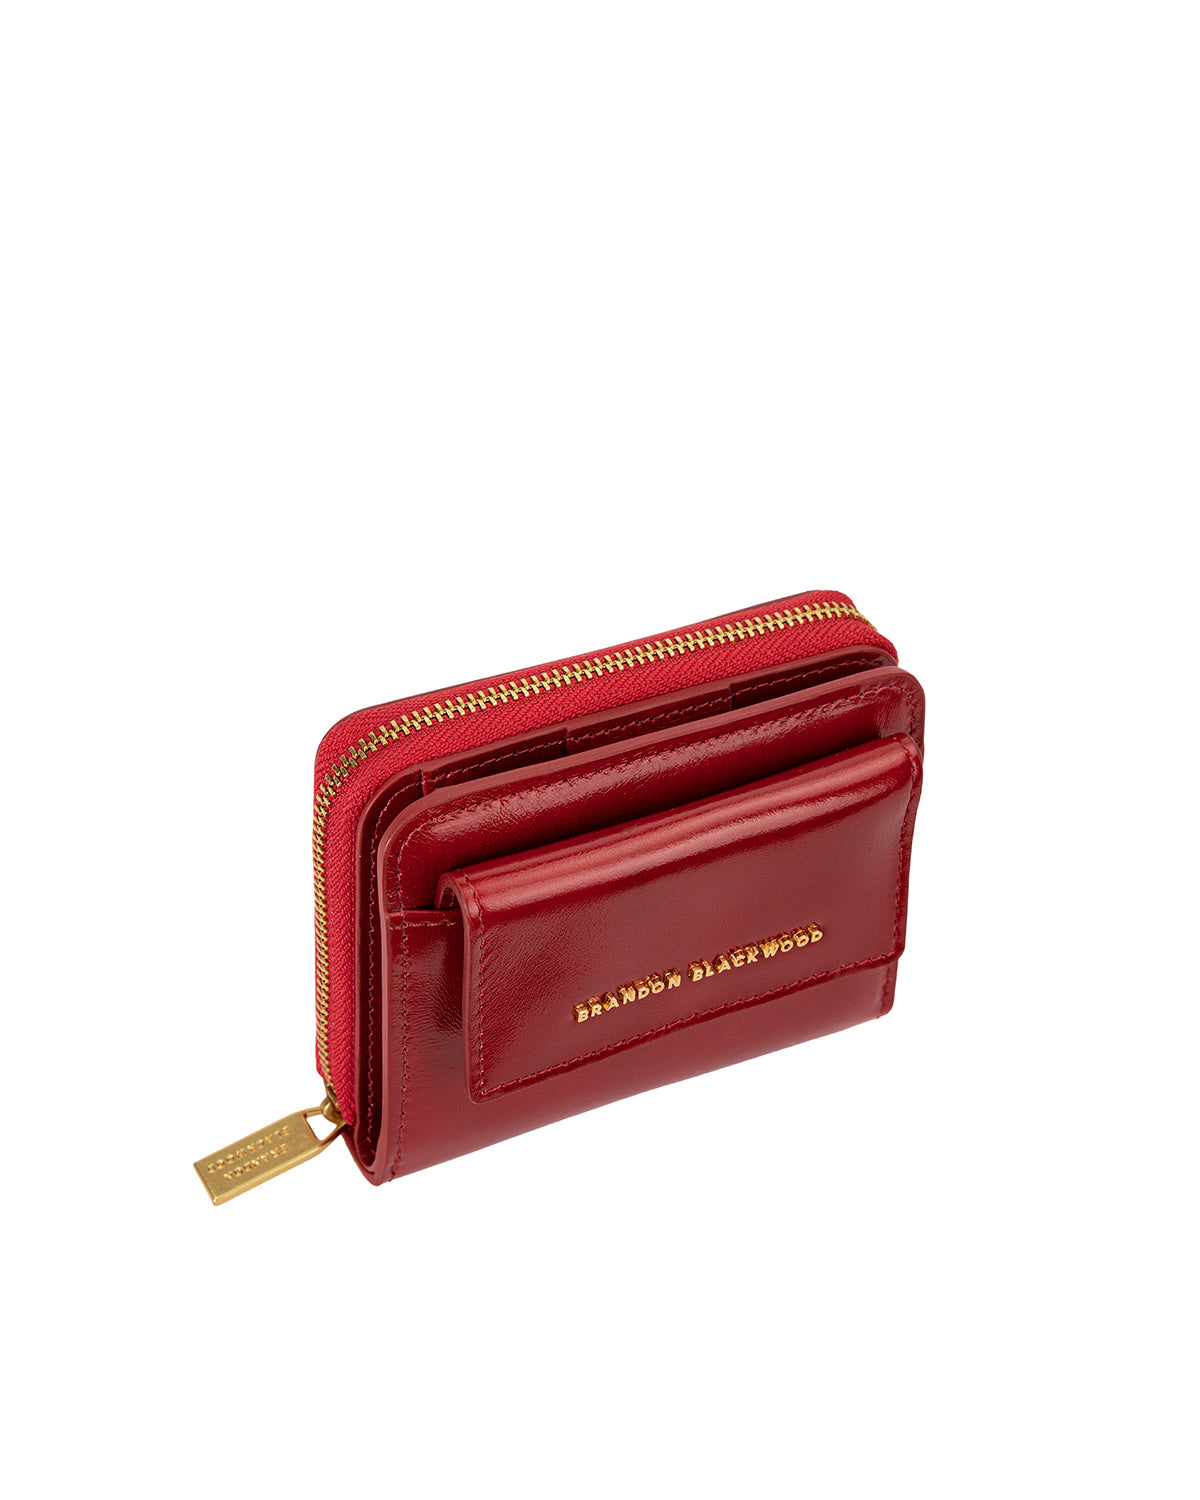 Brandon Blackwood New York - Wooster Wallet - Red Oil Leather